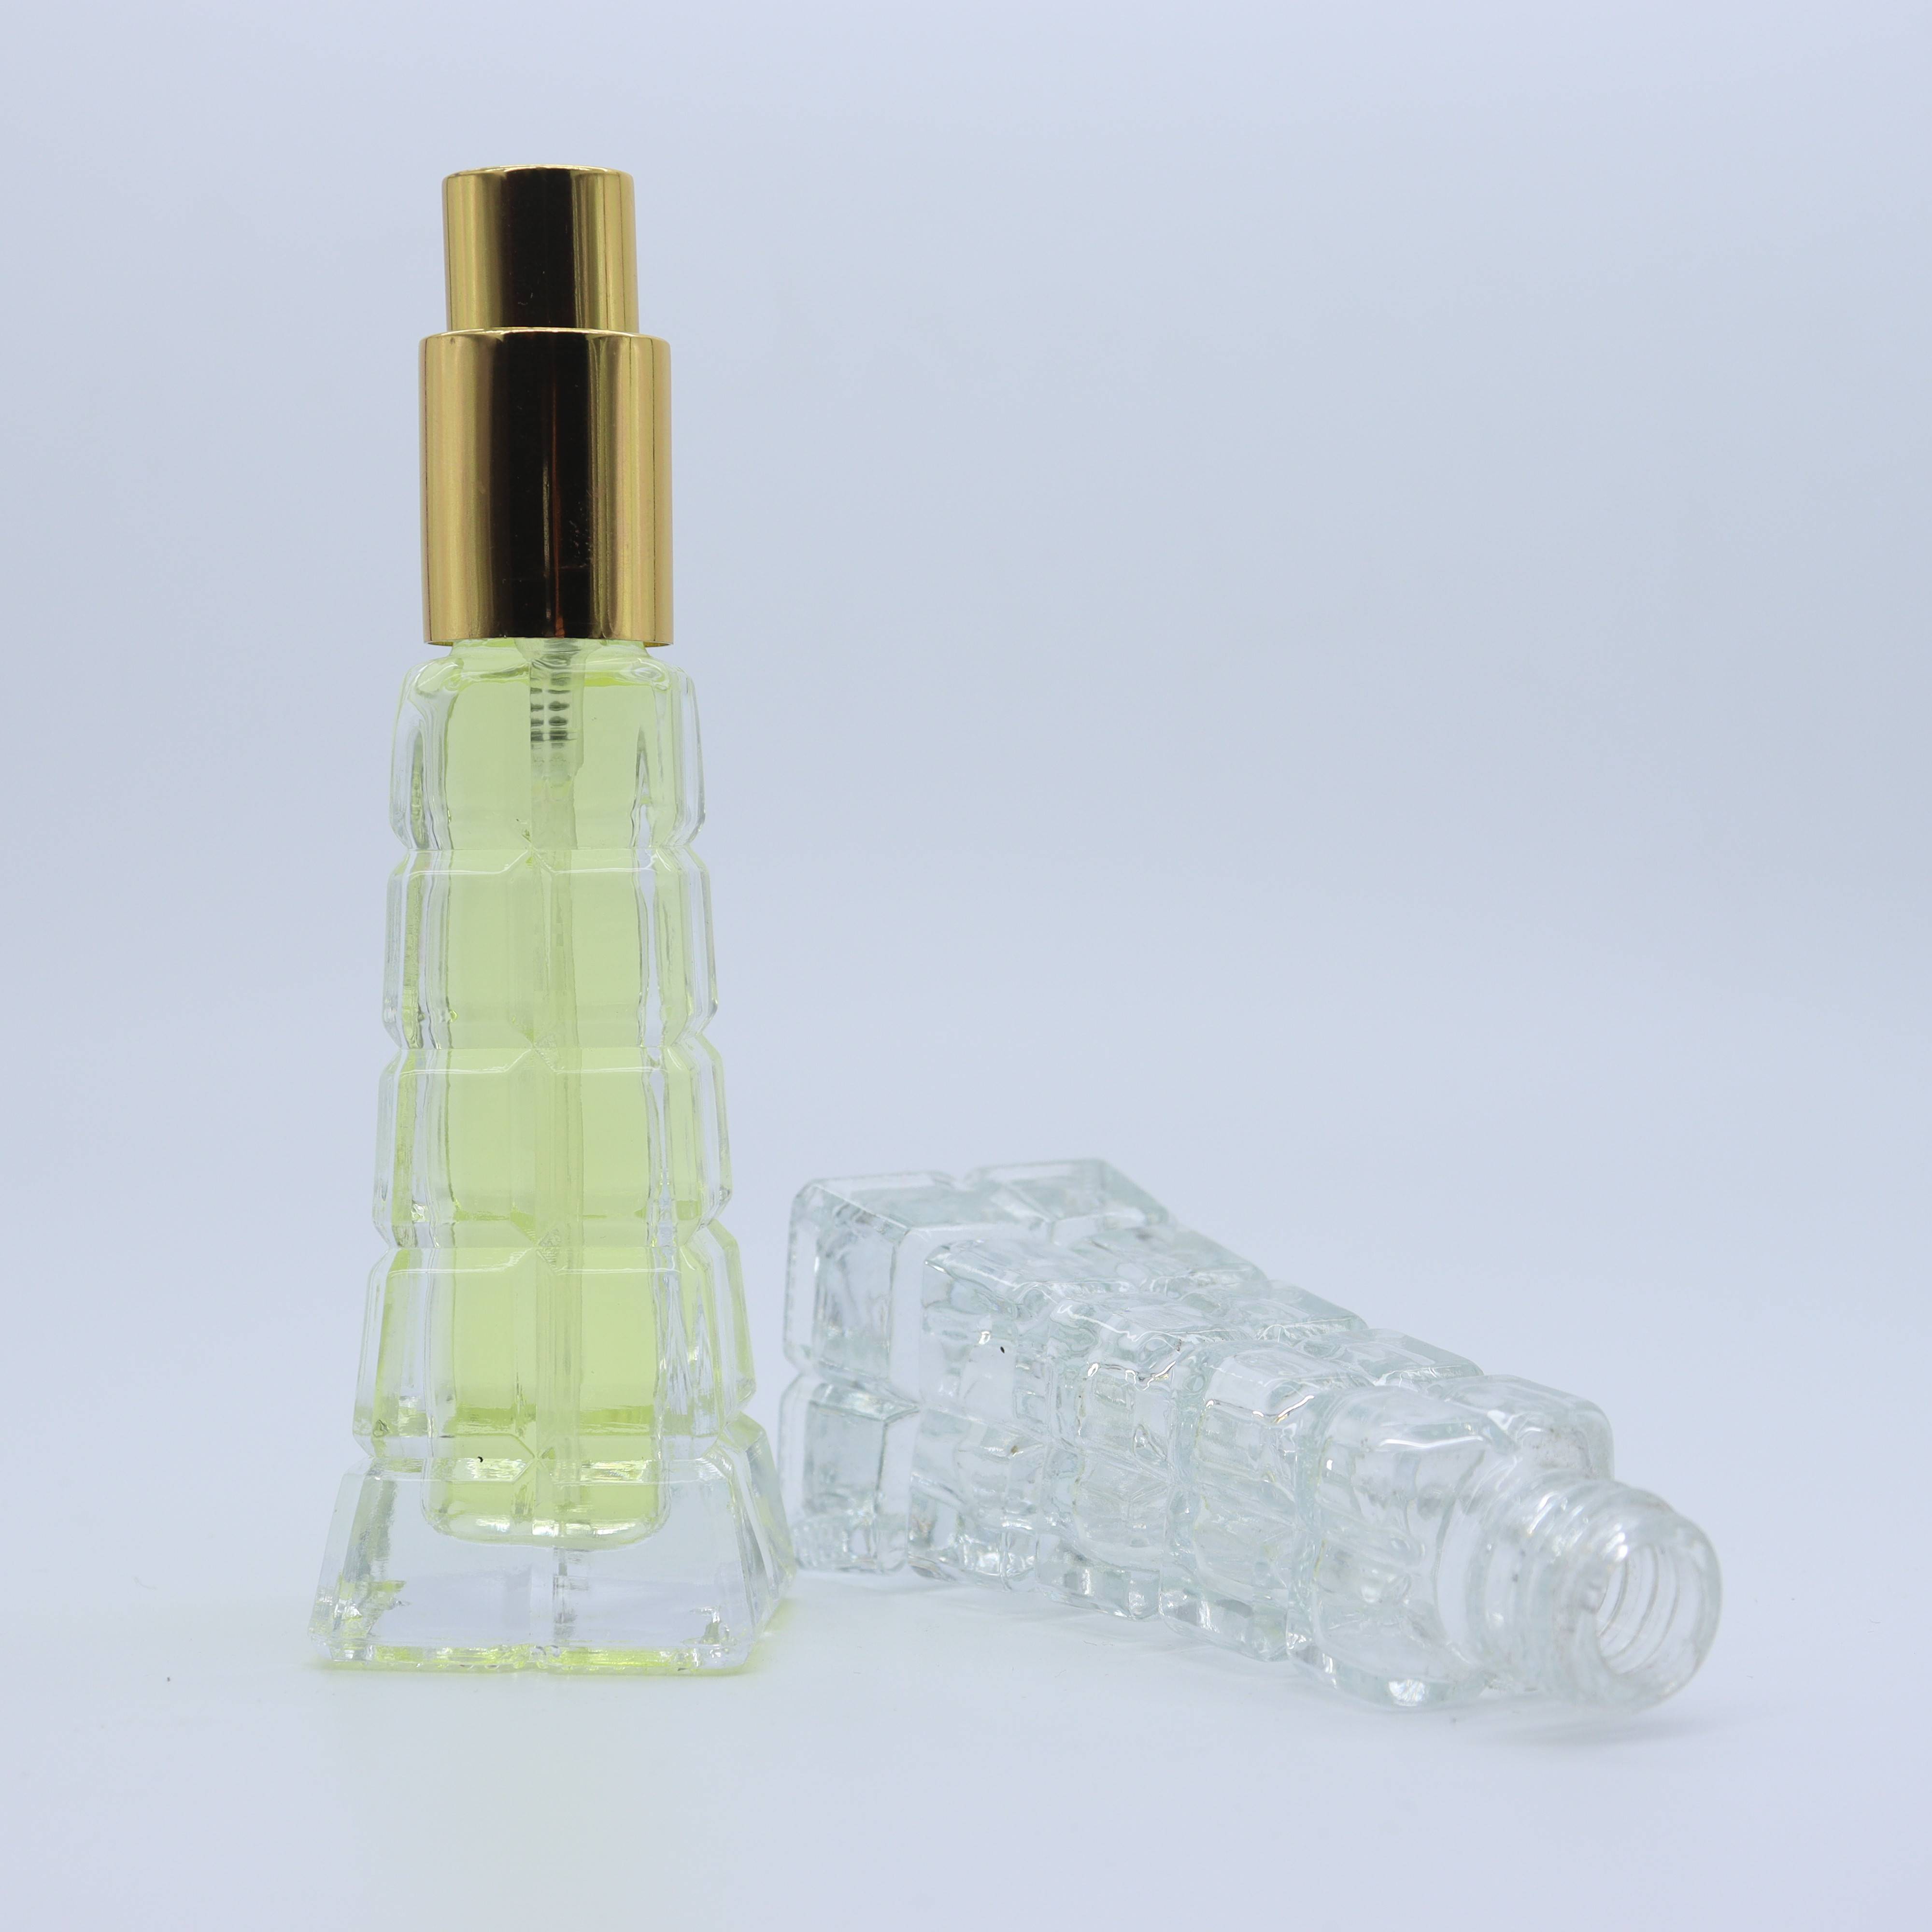 empty perfume bottles small clear perfume bottle modern 25ml glass bottle with pump spray